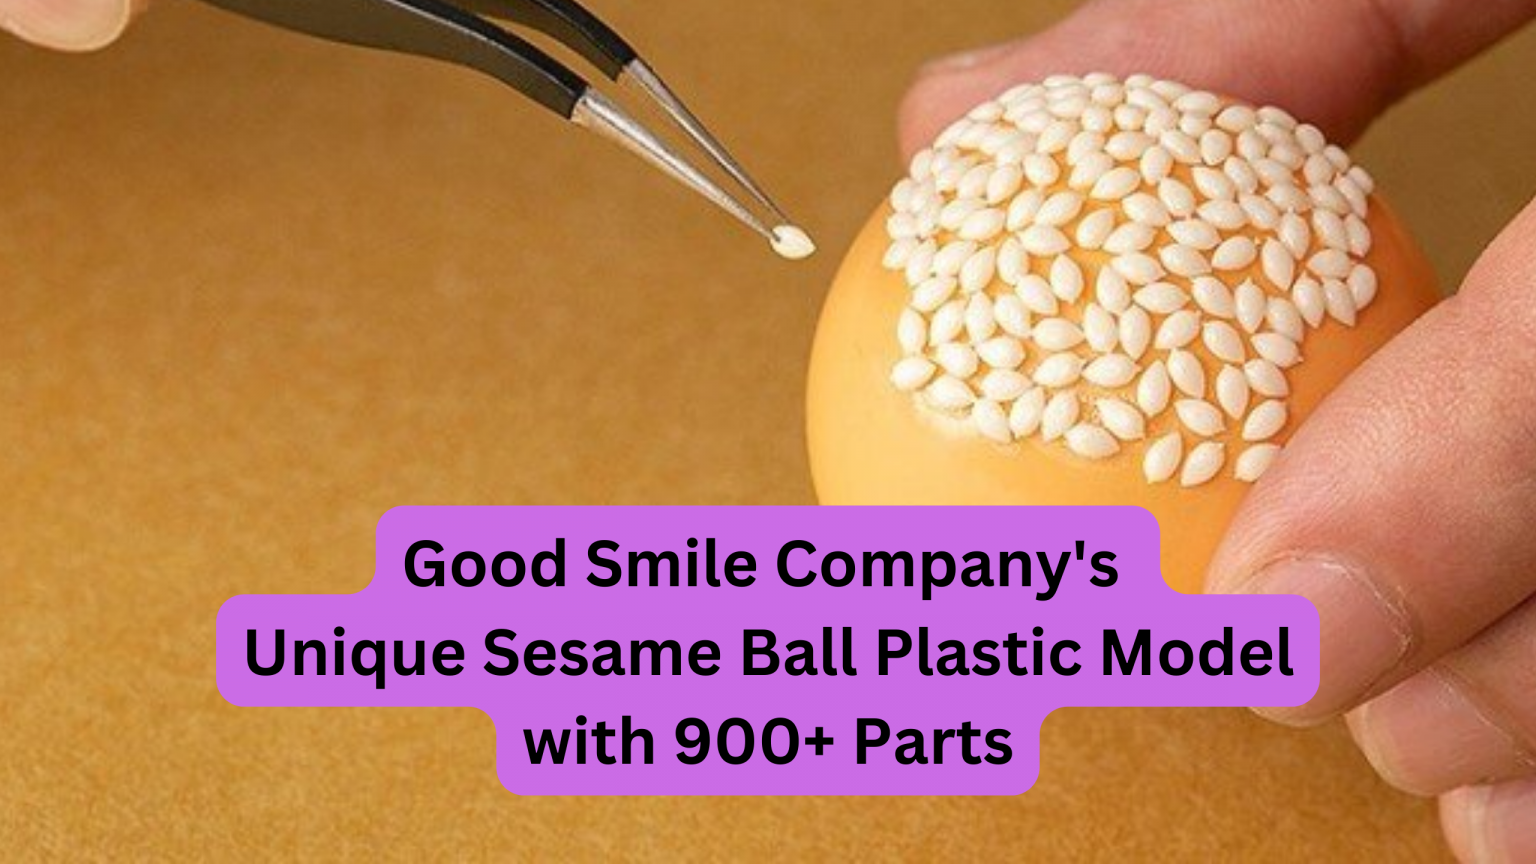 Good Smile Company's Unique Sesame Ball Plastic Model with 900+ Parts